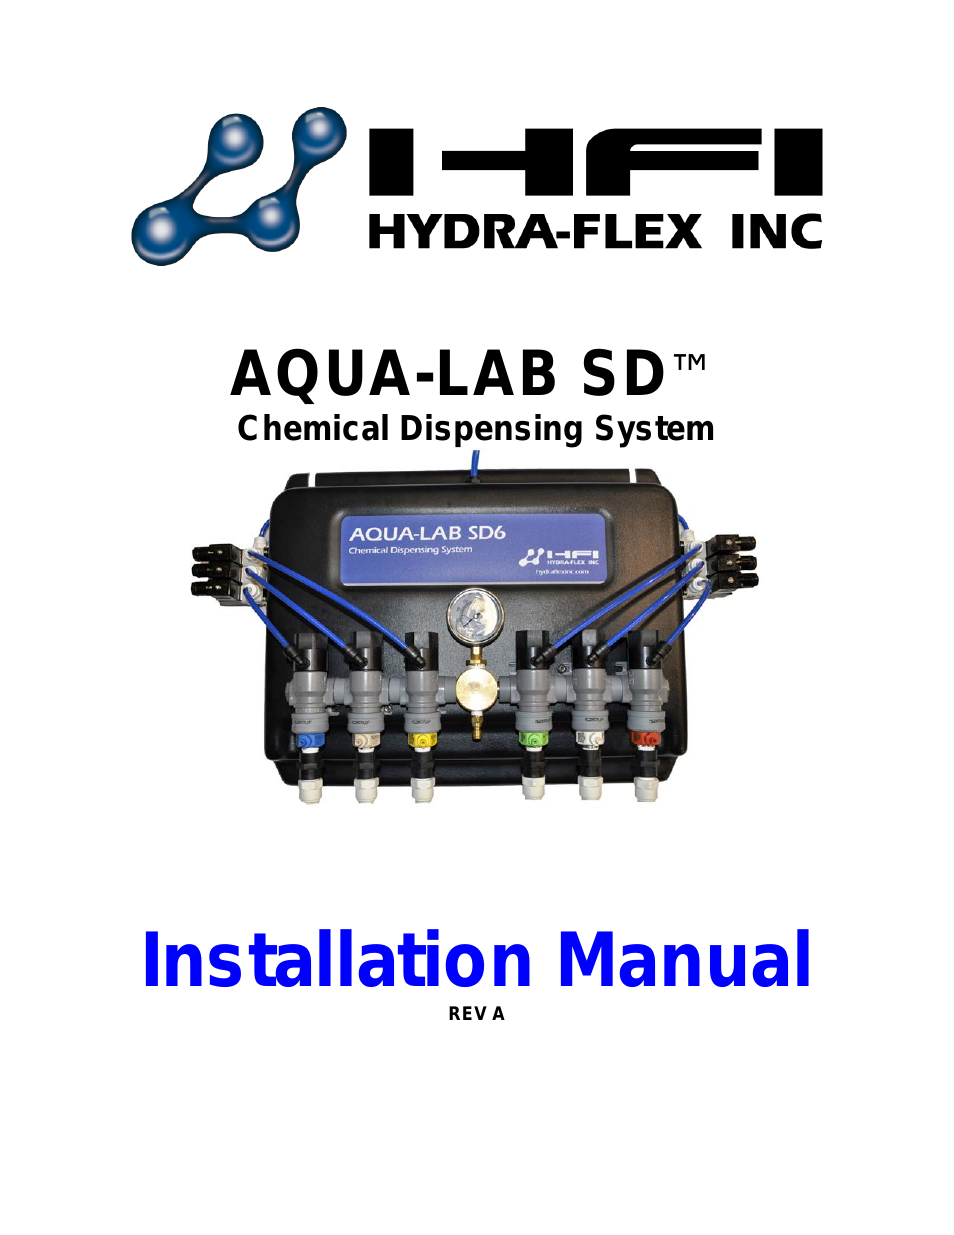 Aqua-Lab SD Installation Manual